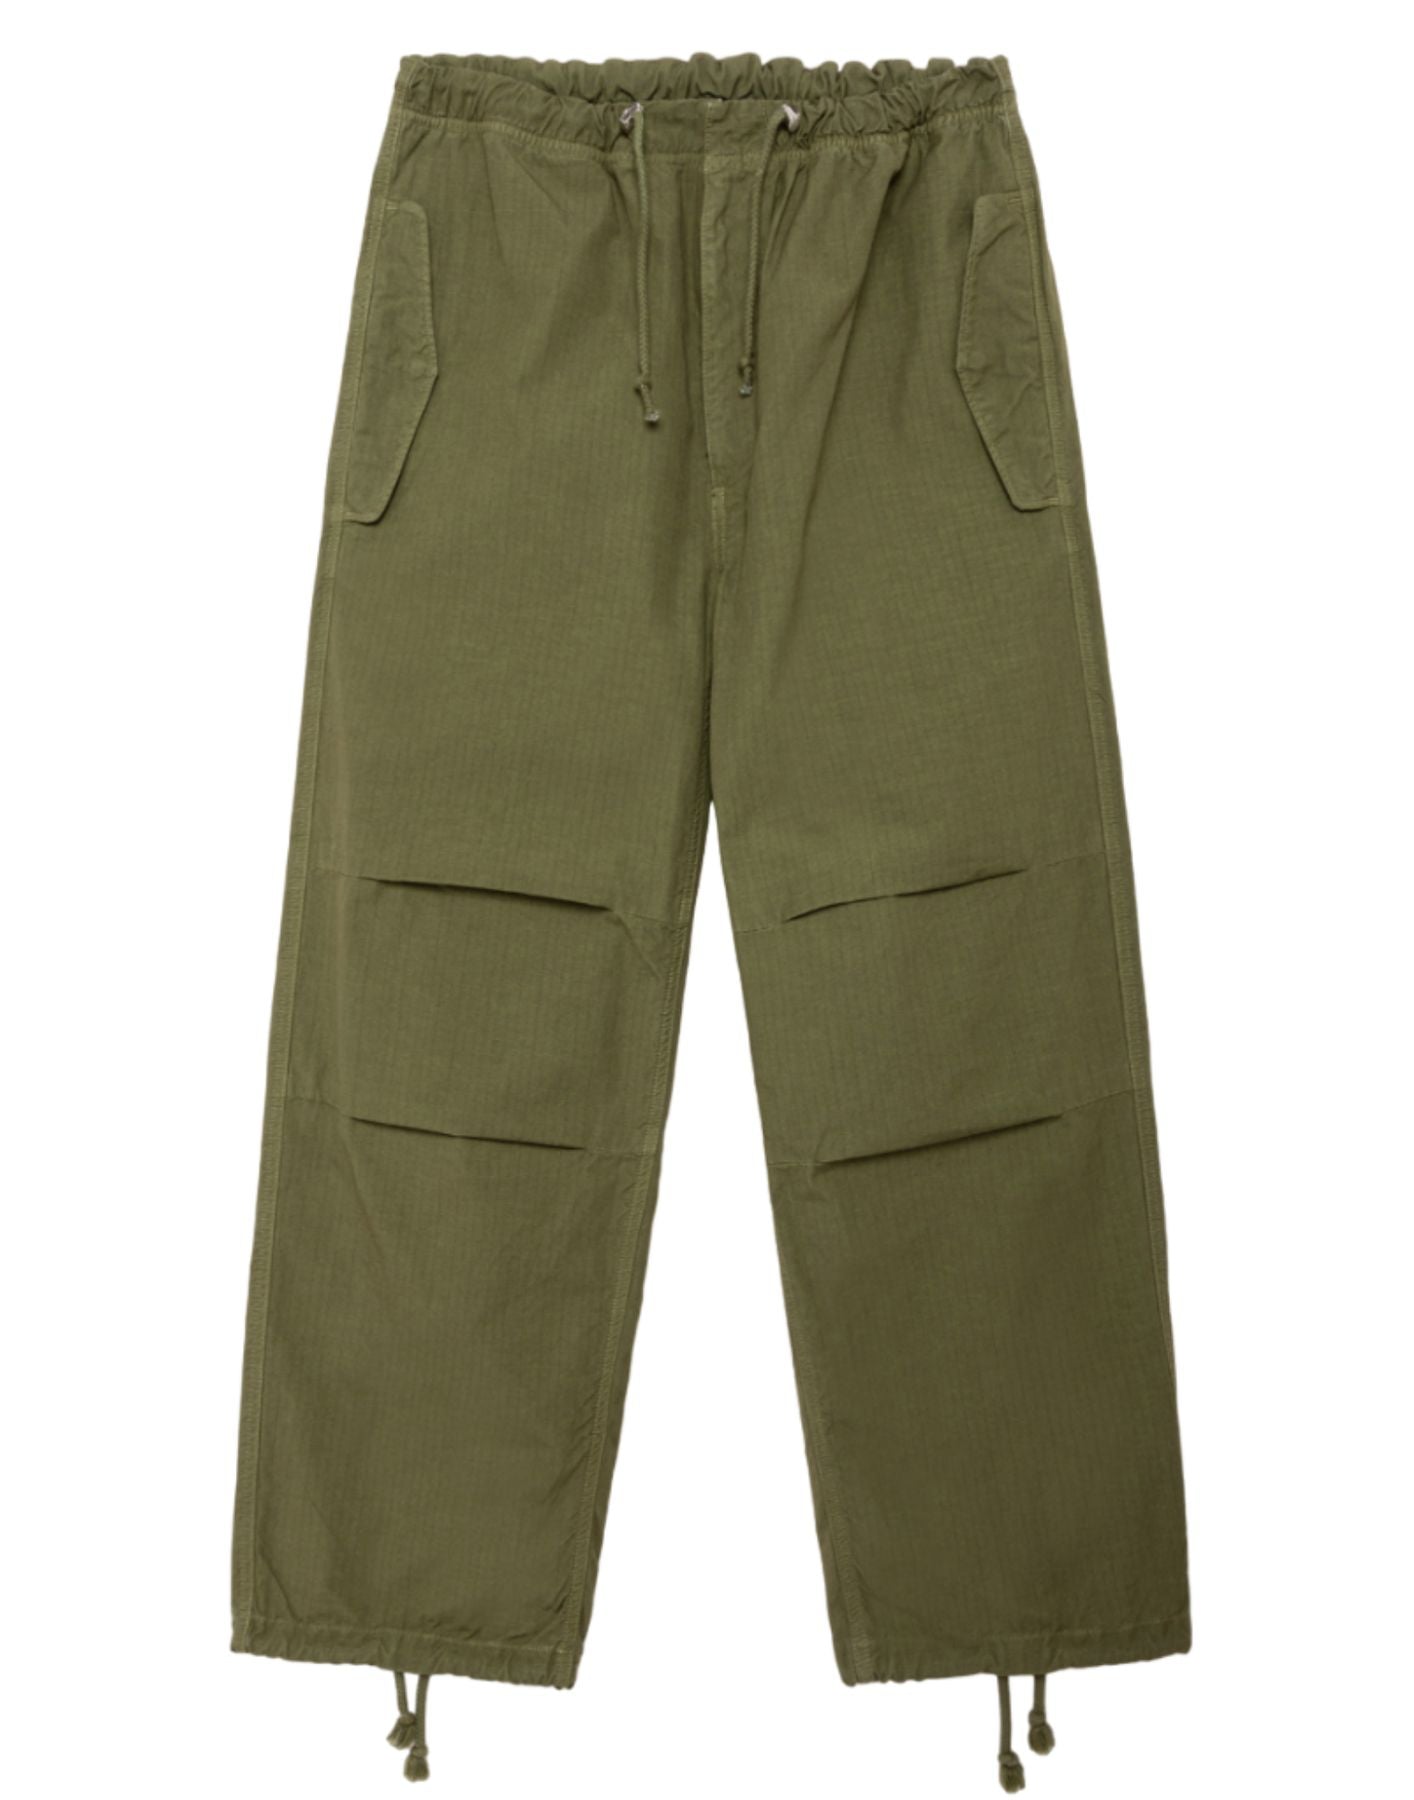 Pantaloni da uomo AMU067P4160111 Army Green Amish